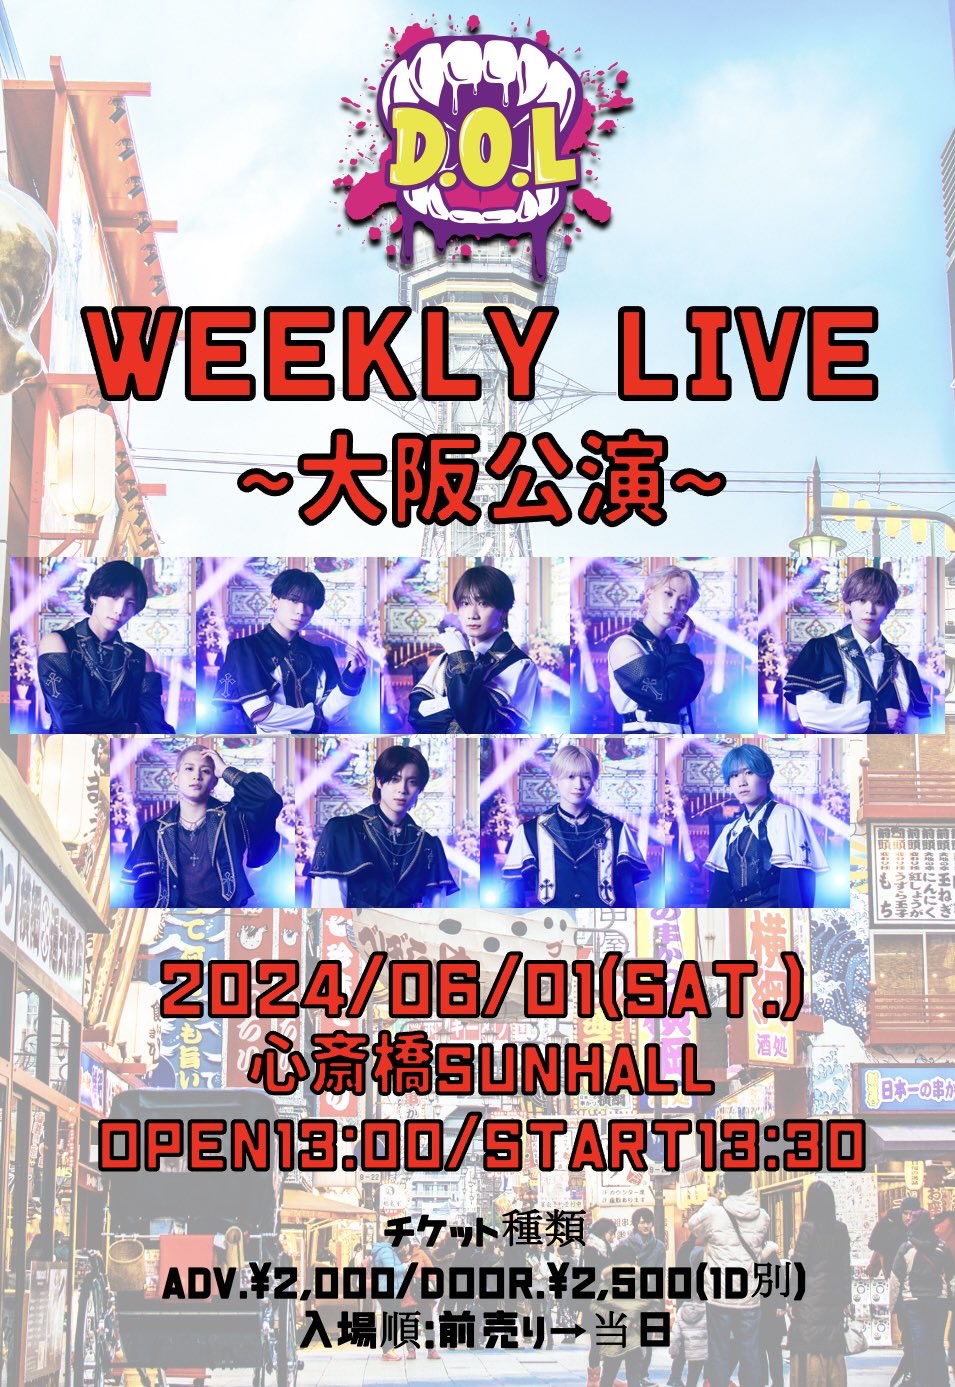 D.O.L WEEKLY LIVE~大阪公演~